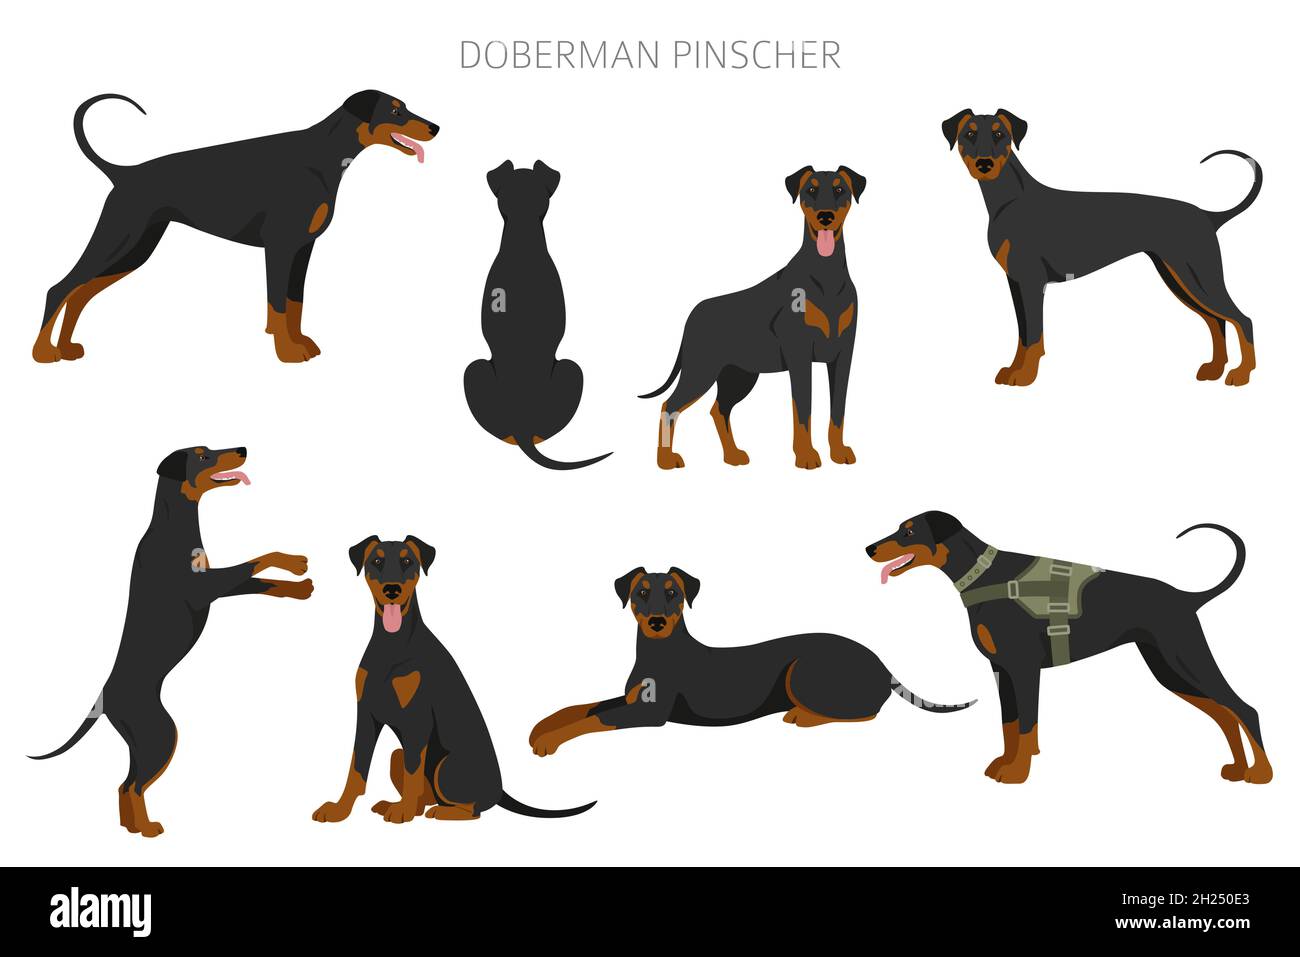 Doberman pinscher perros clipart. Diferentes poses, juego de colores de  capa. Ilustración vectorial Imagen Vector de stock - Alamy